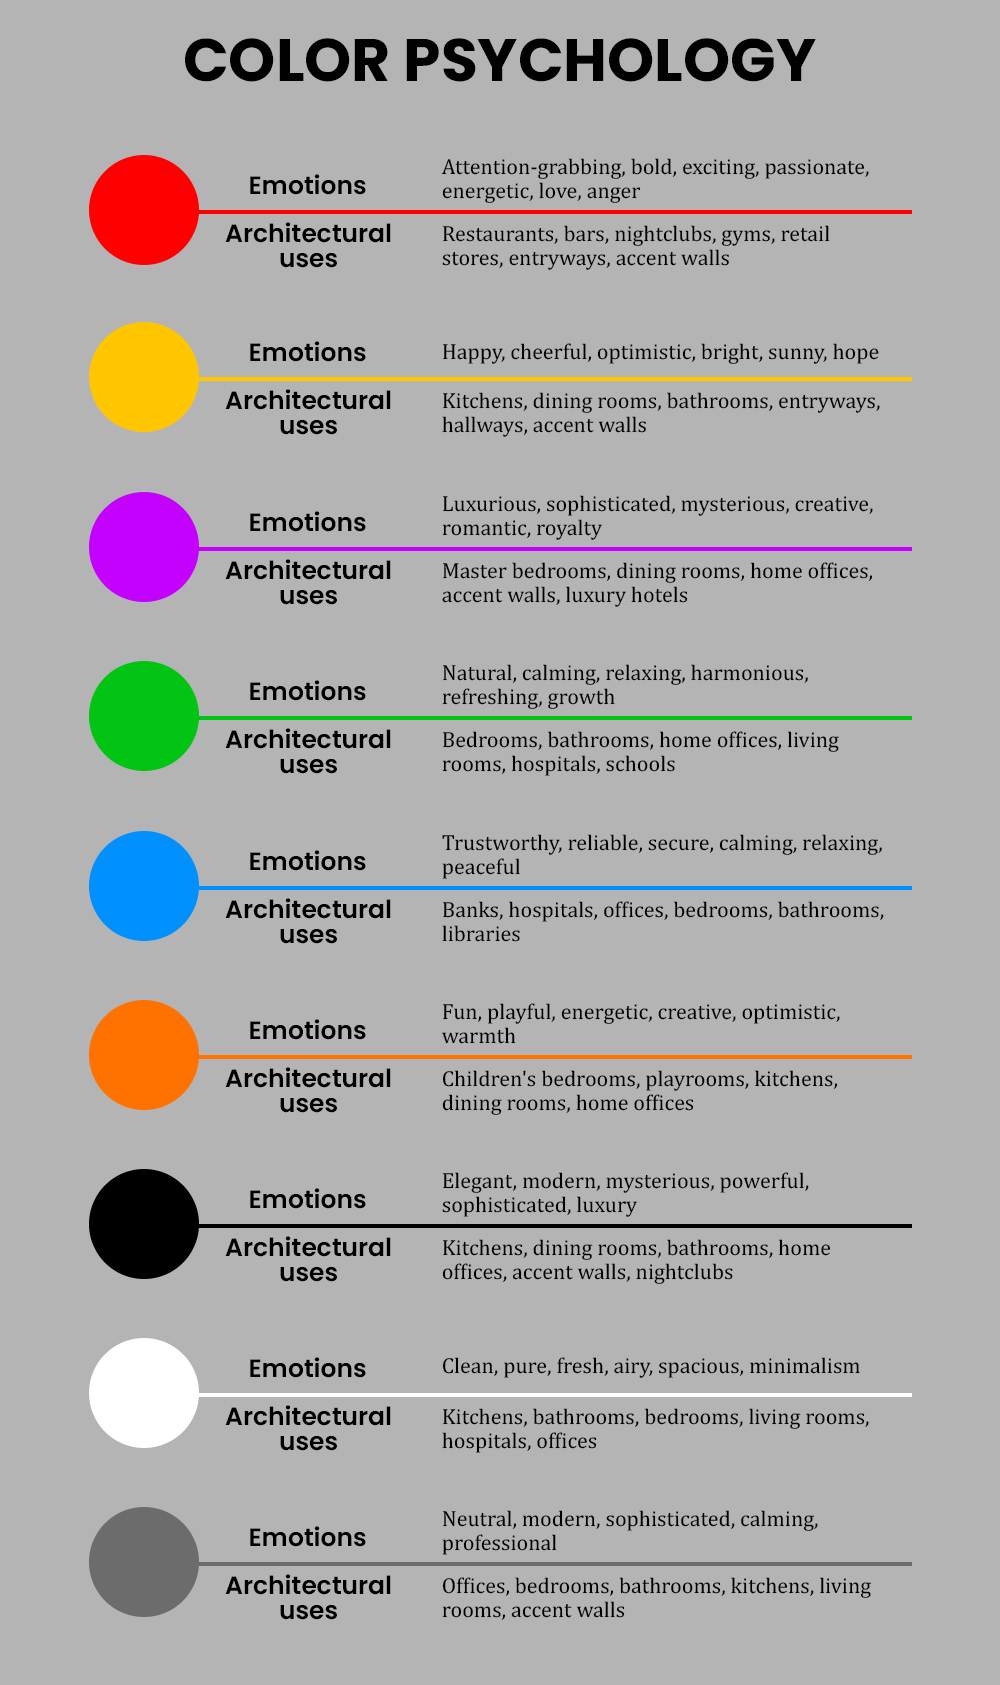 Color Psychology in Architectural Design